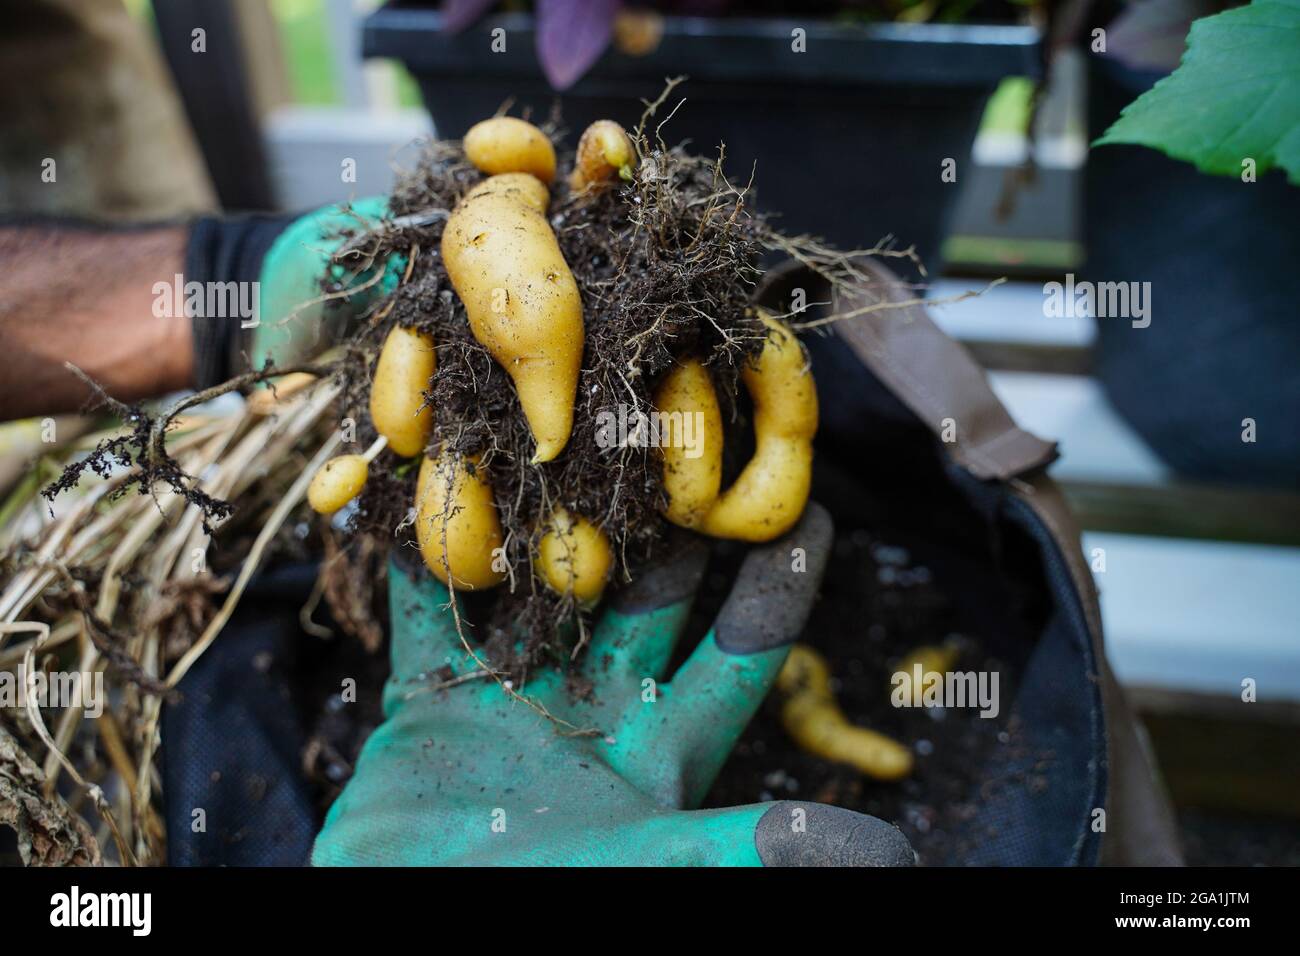 https://c8.alamy.com/comp/2GA1JTM/hand-holding-freshly-harvested-young-yellow-poataoes-grown-in-grow-bag-selective-focus-2GA1JTM.jpg